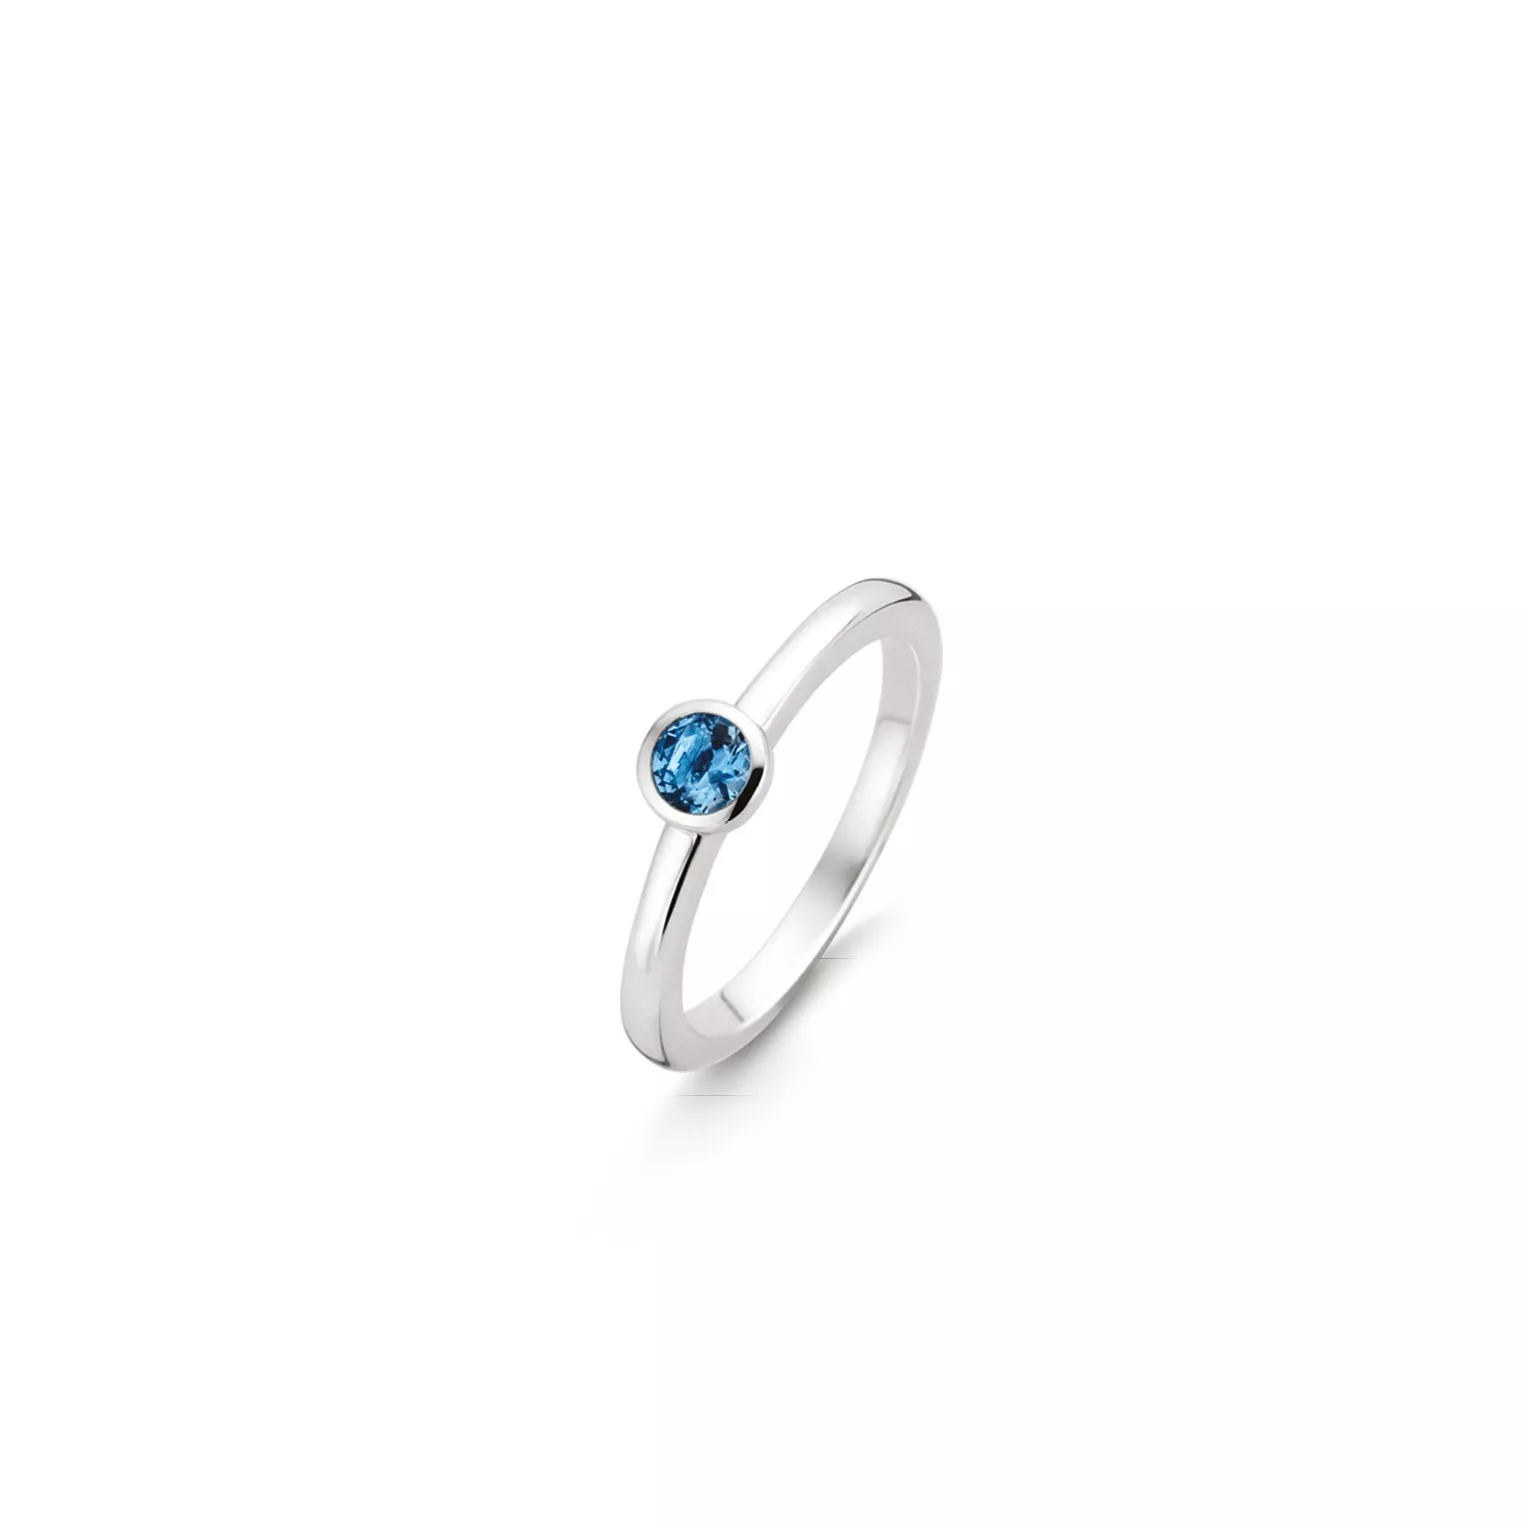 TI SENTO-Milano 1868DB Ring zilver-kristal zilverkleurig-blauw